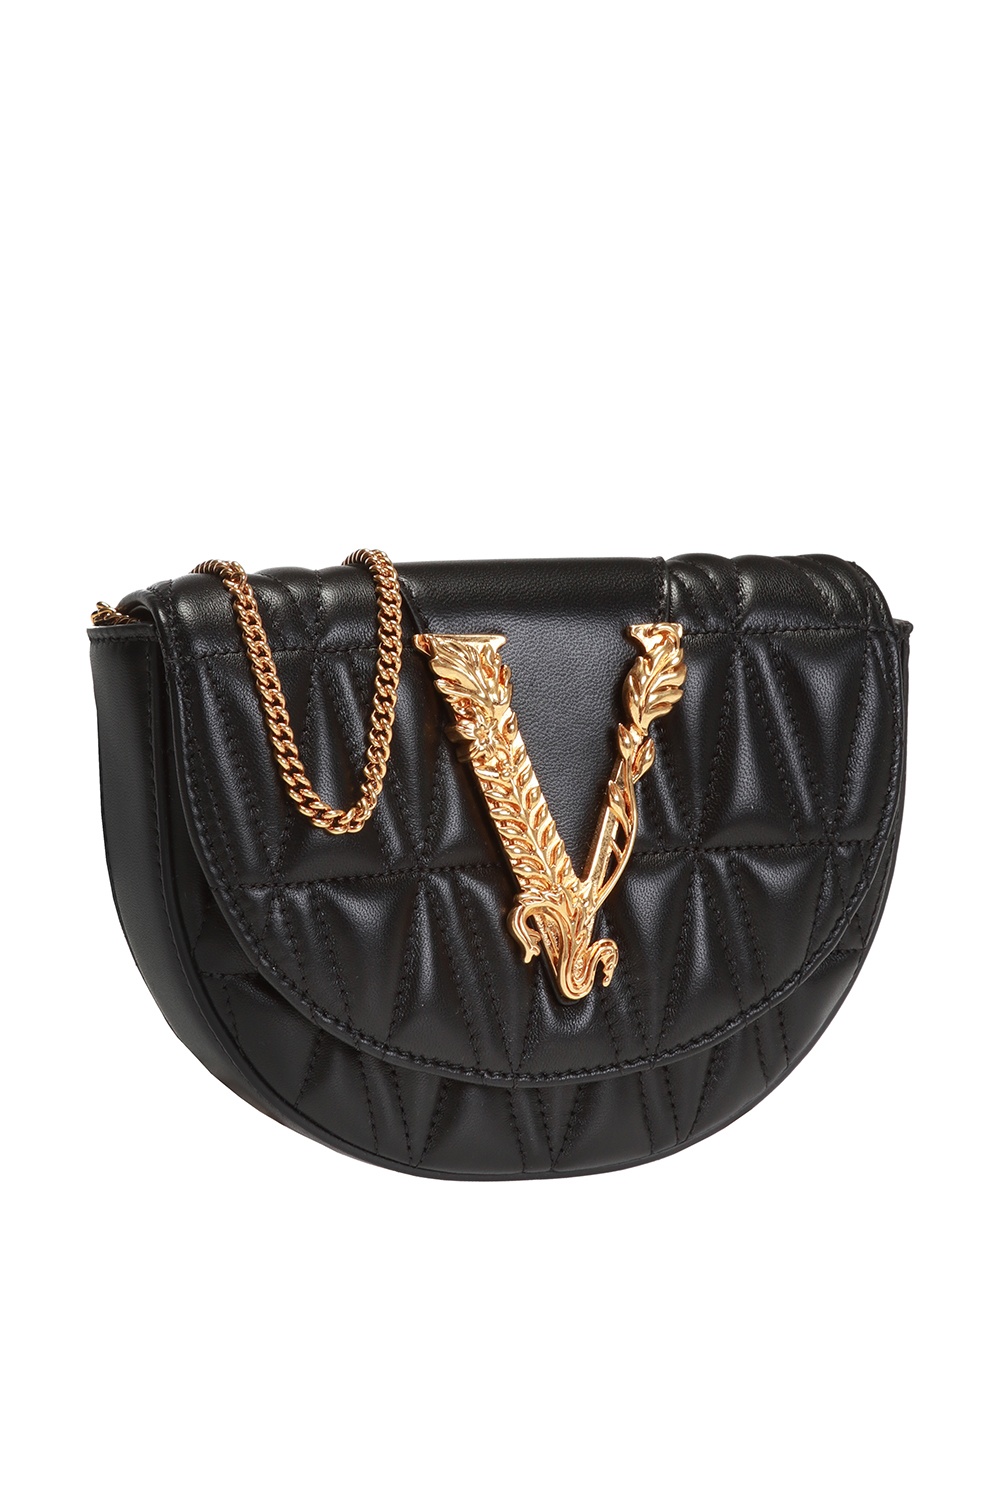 Versace - Authenticated Virtus Handbag - Leather Black Plain for Women, Very Good Condition